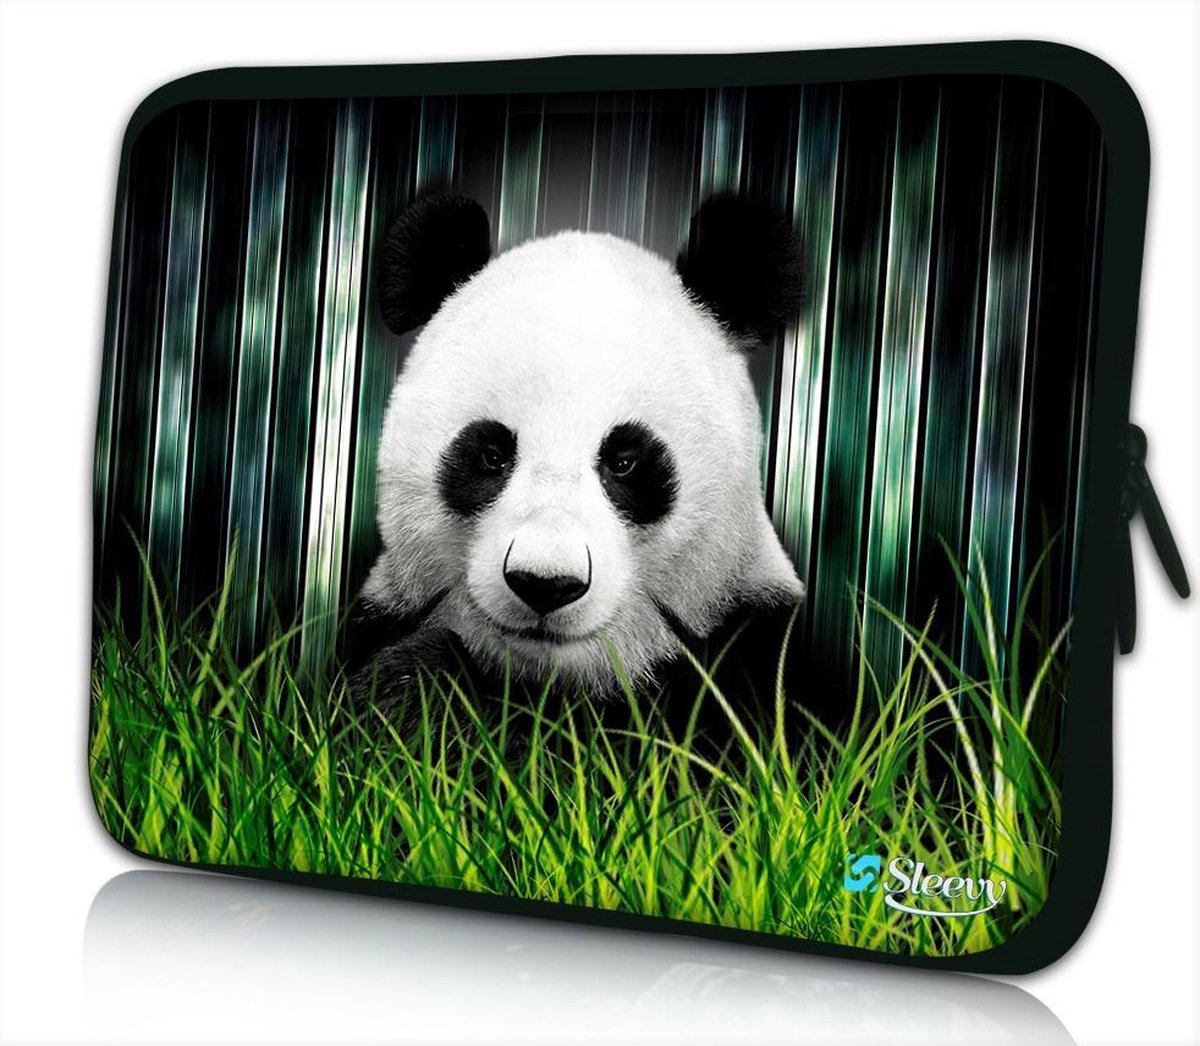 Sleevy 11.6 laptophoes pandabeer - laptop sleeve - laptopcover - Alle inch-maten & keuze uit 250+ designs! Sleevy